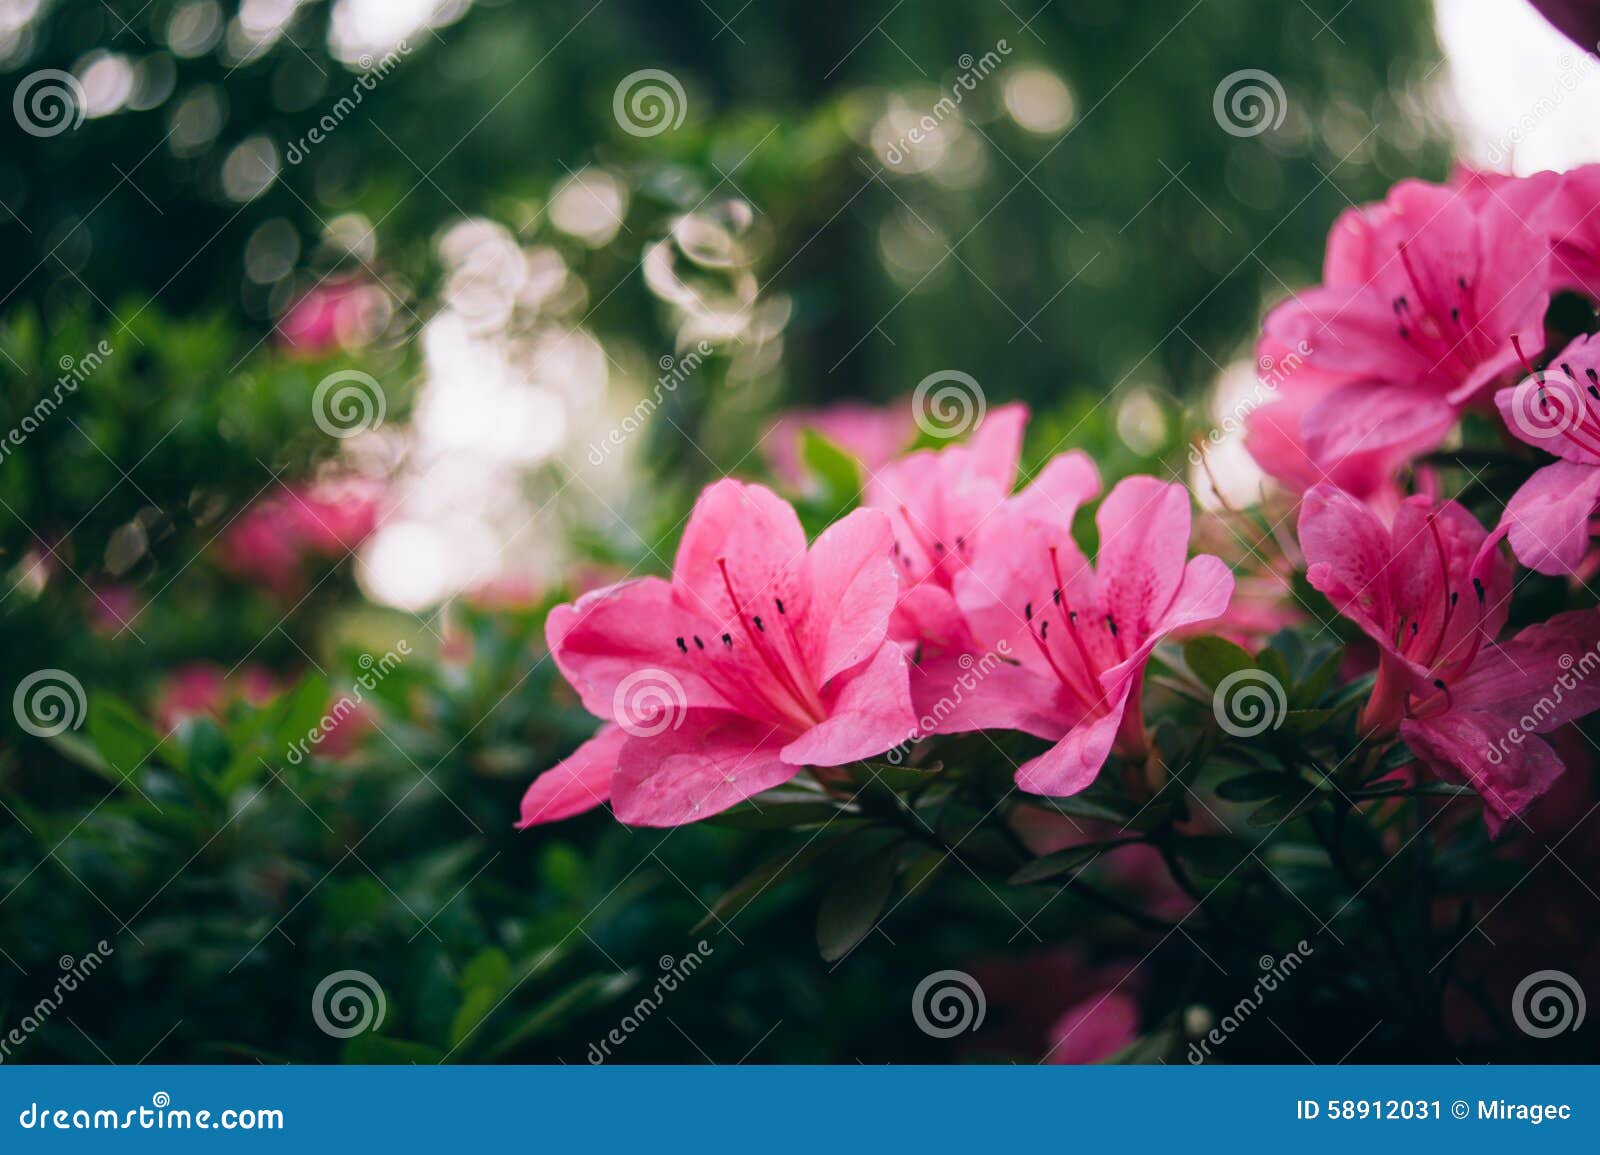 pink azaleas bush